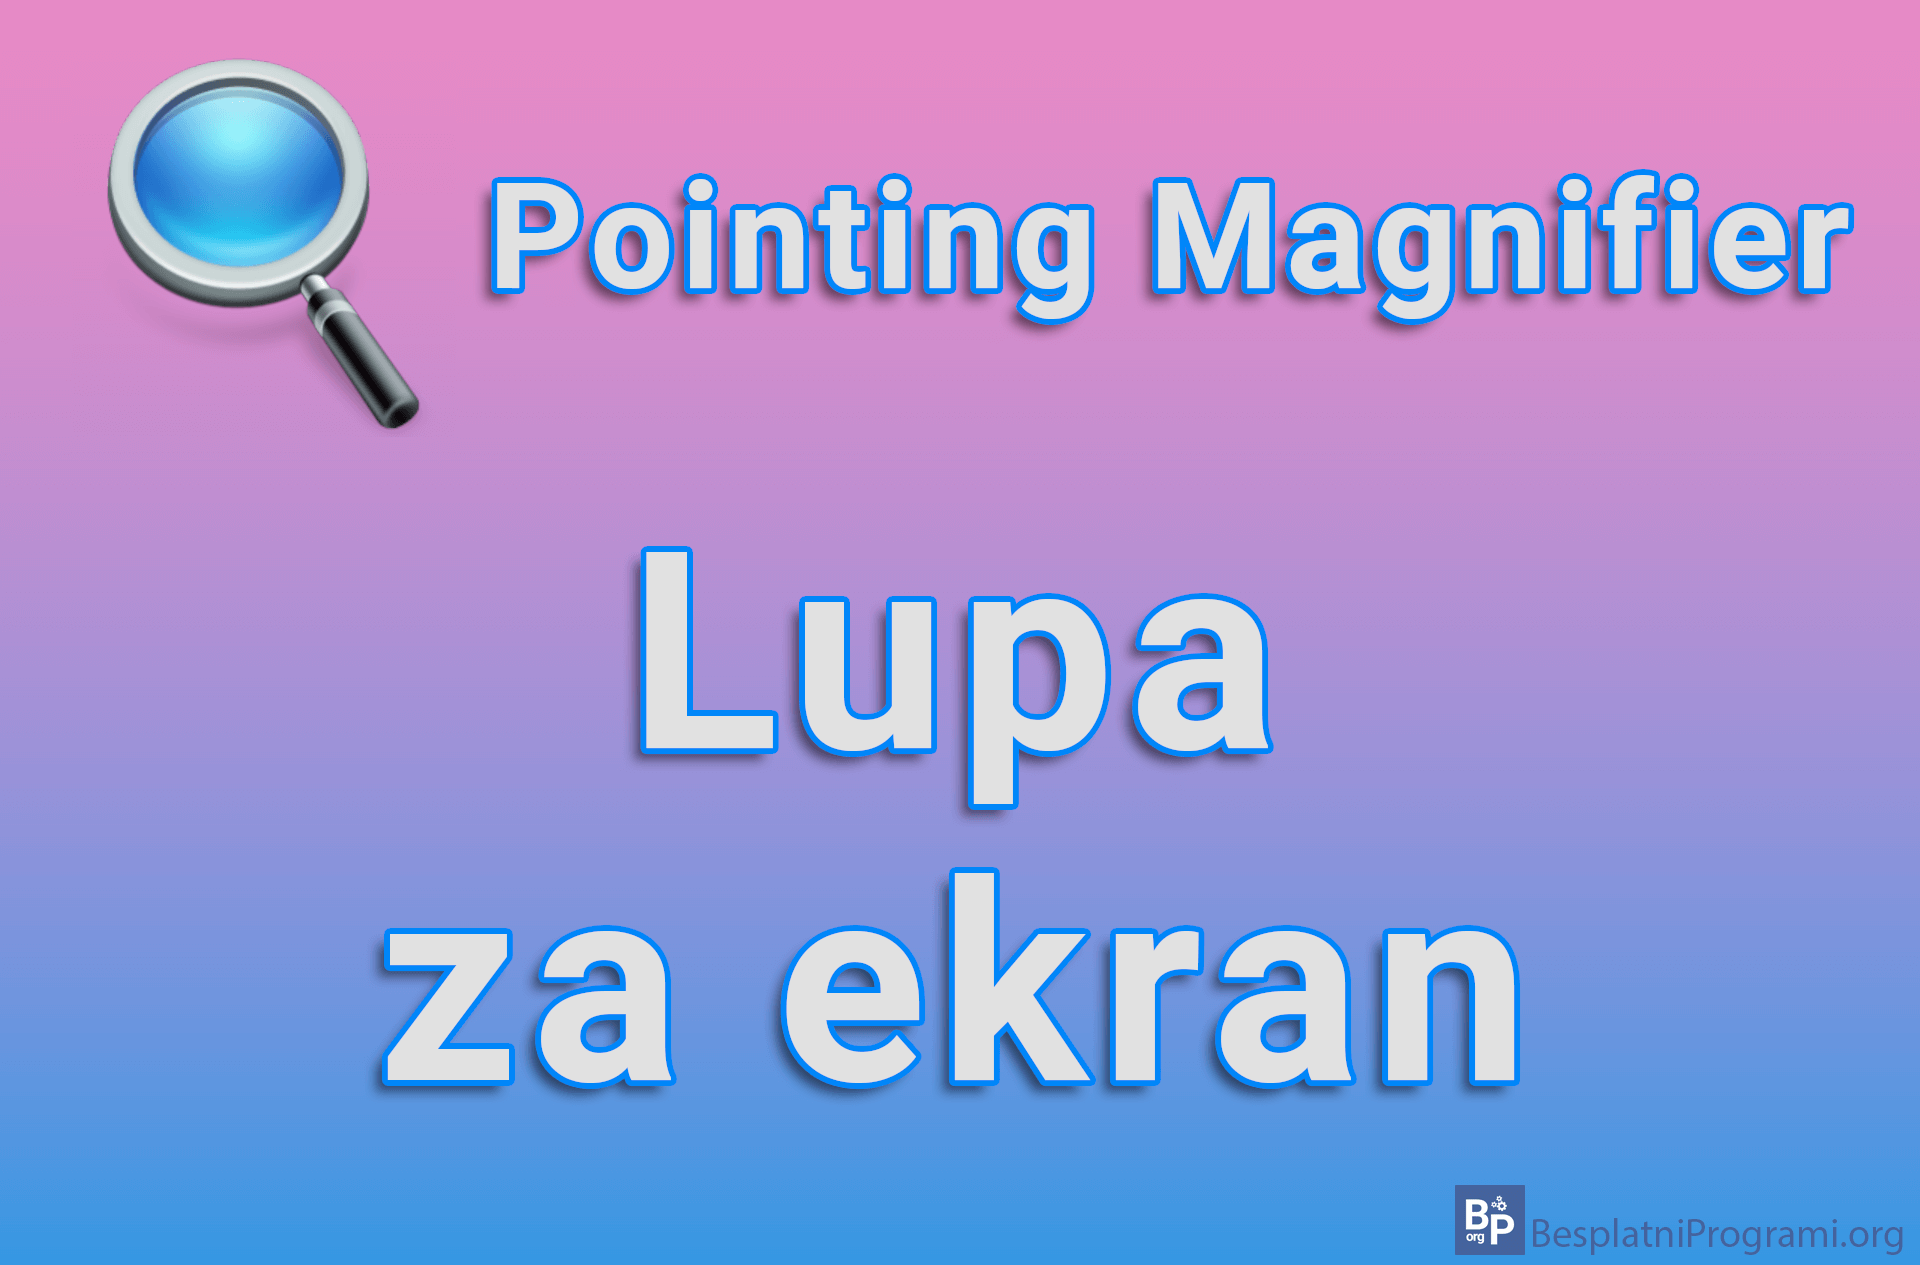 Pointing Magnifier - Lupa za ekran